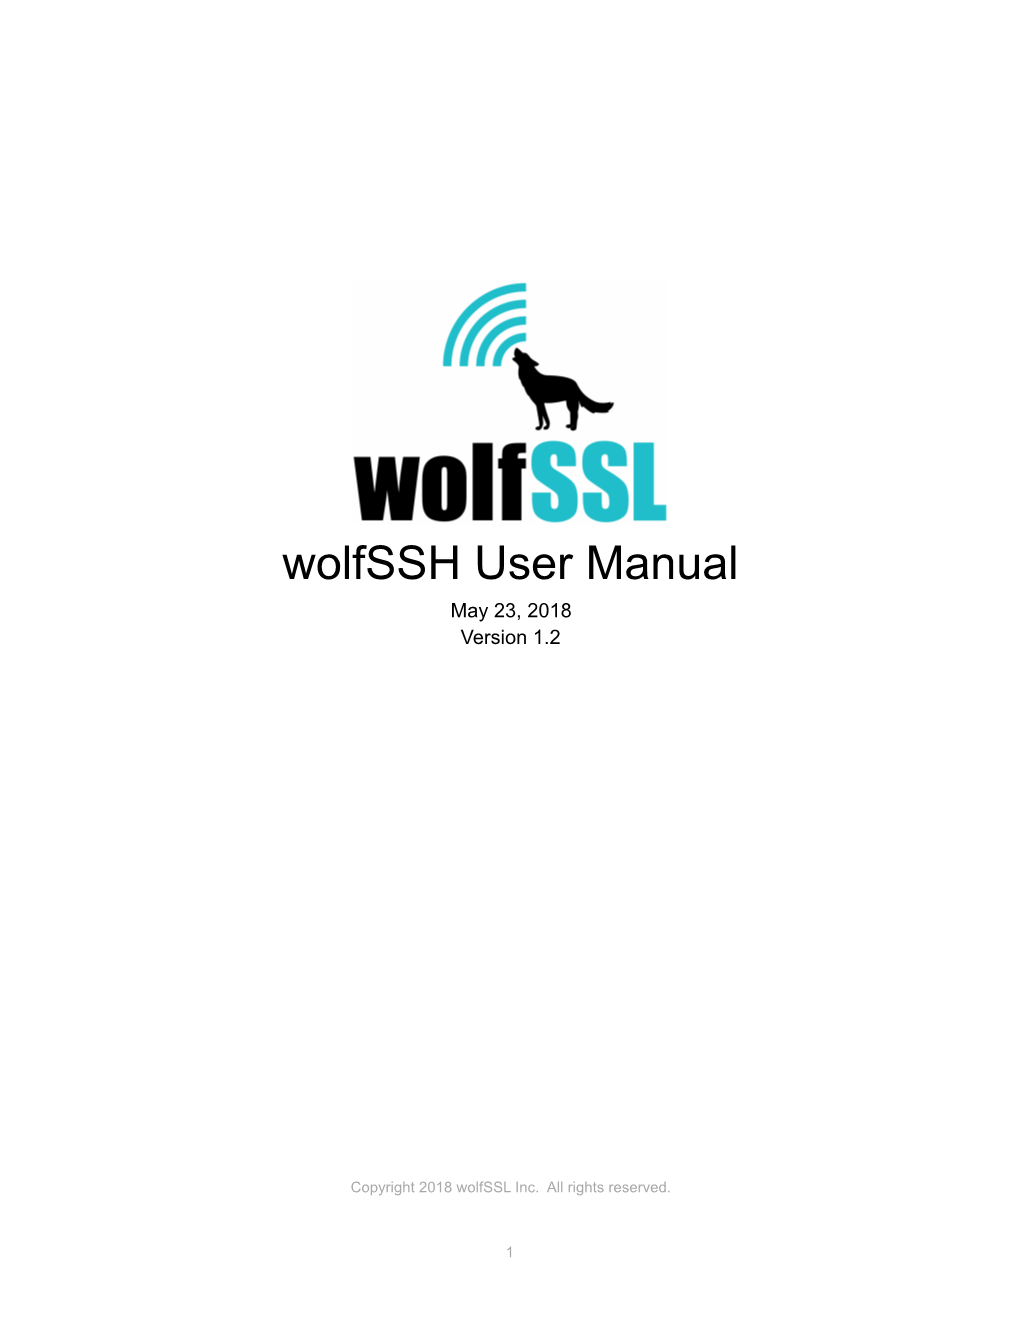 Wolfssh User Manual May 23, 2018 Version 1.2